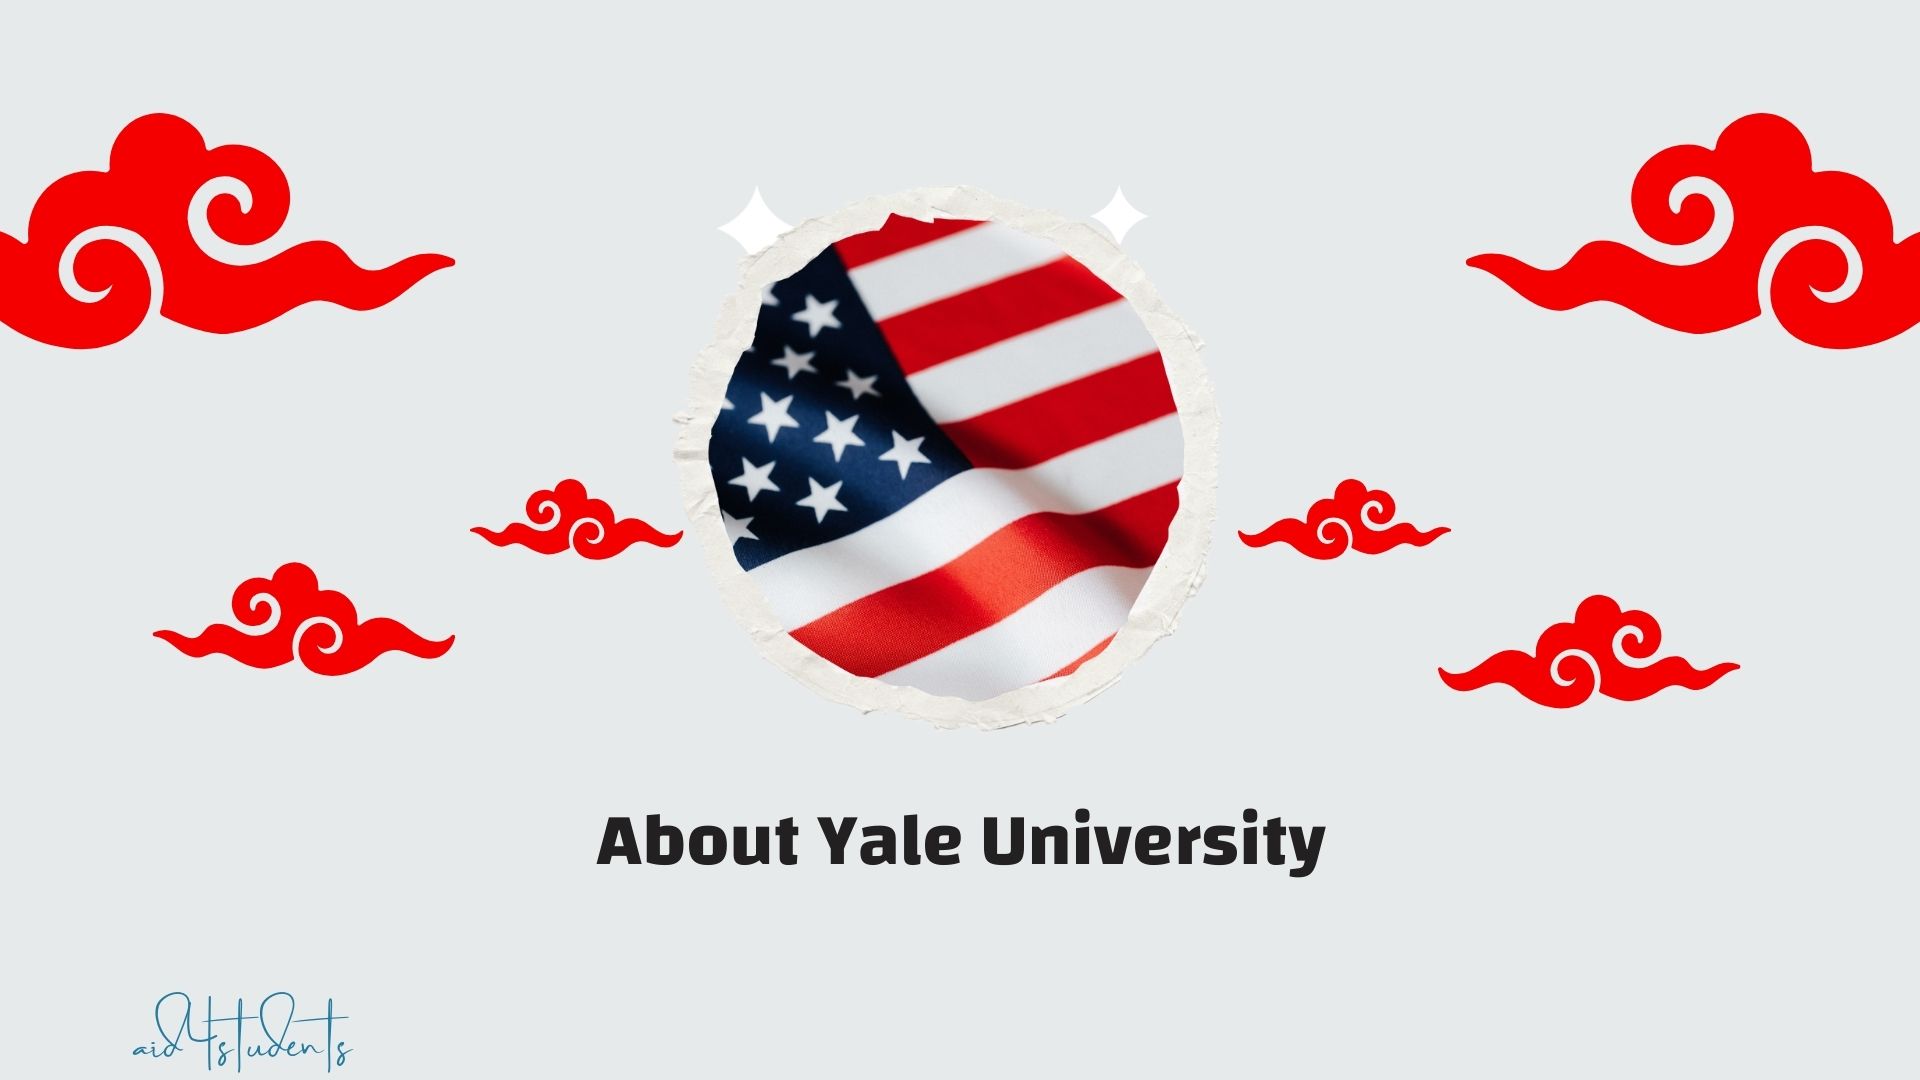 About Yale University